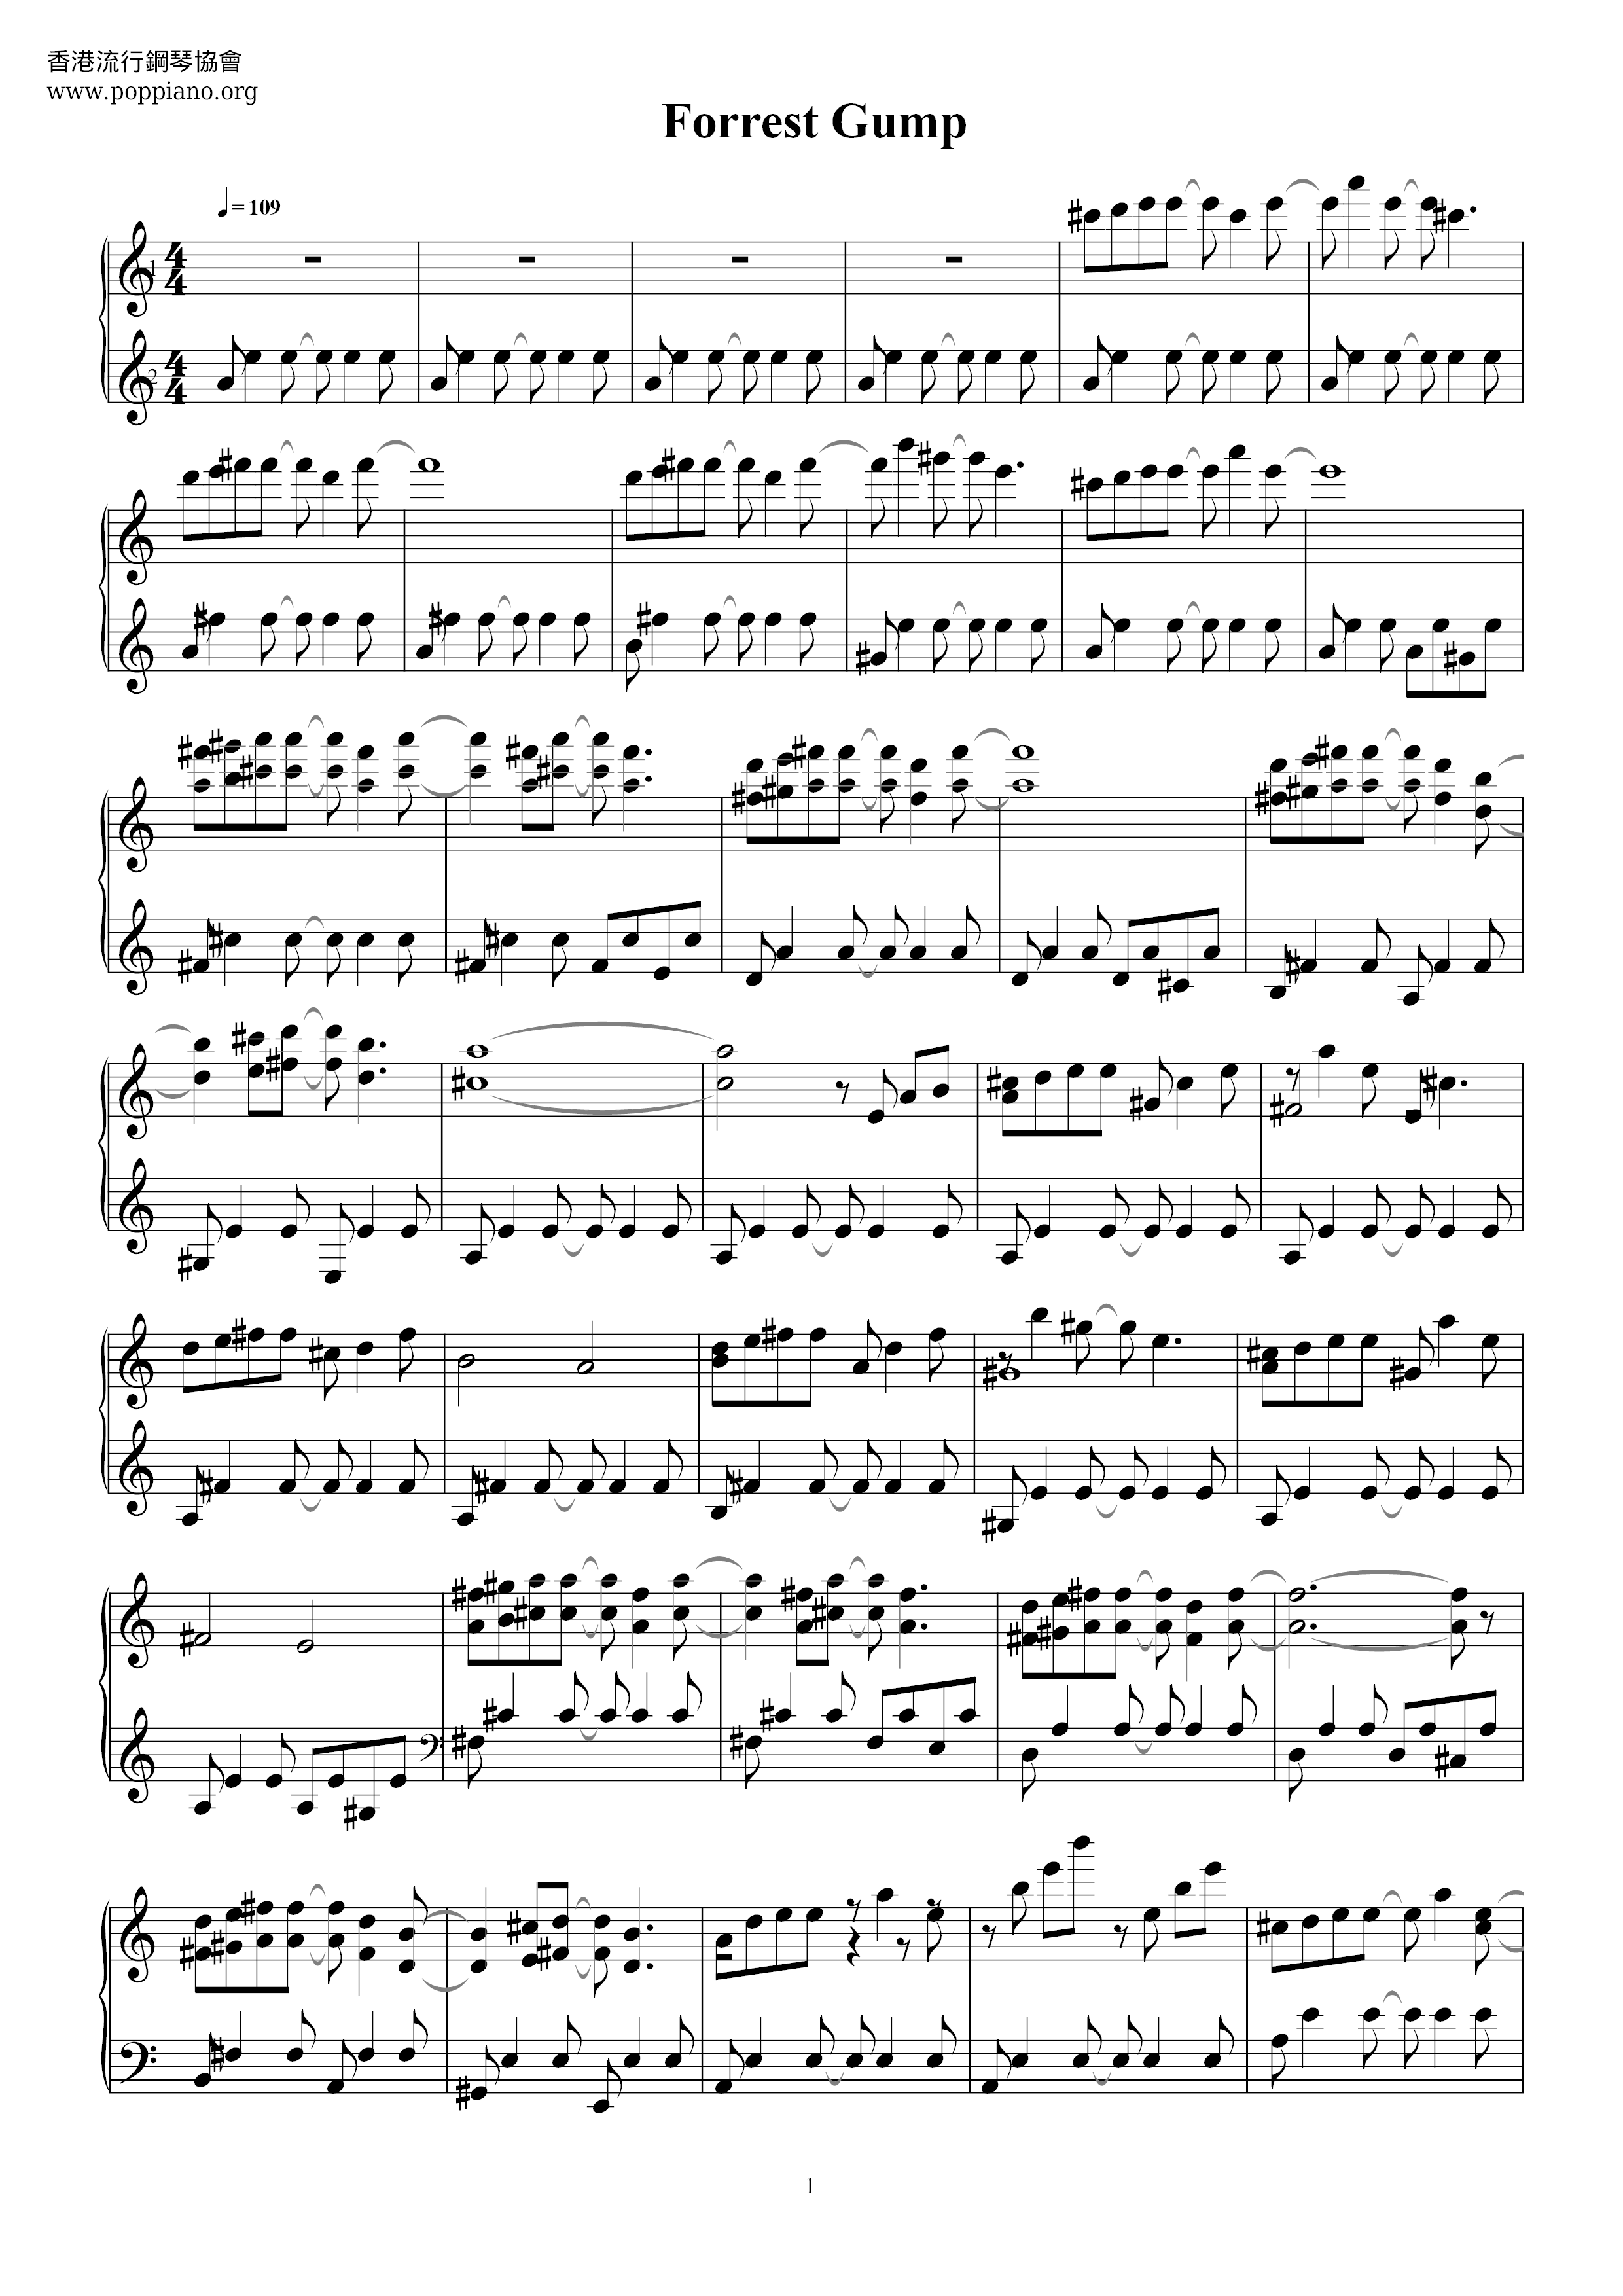 Forrest Gump Theme Song Score